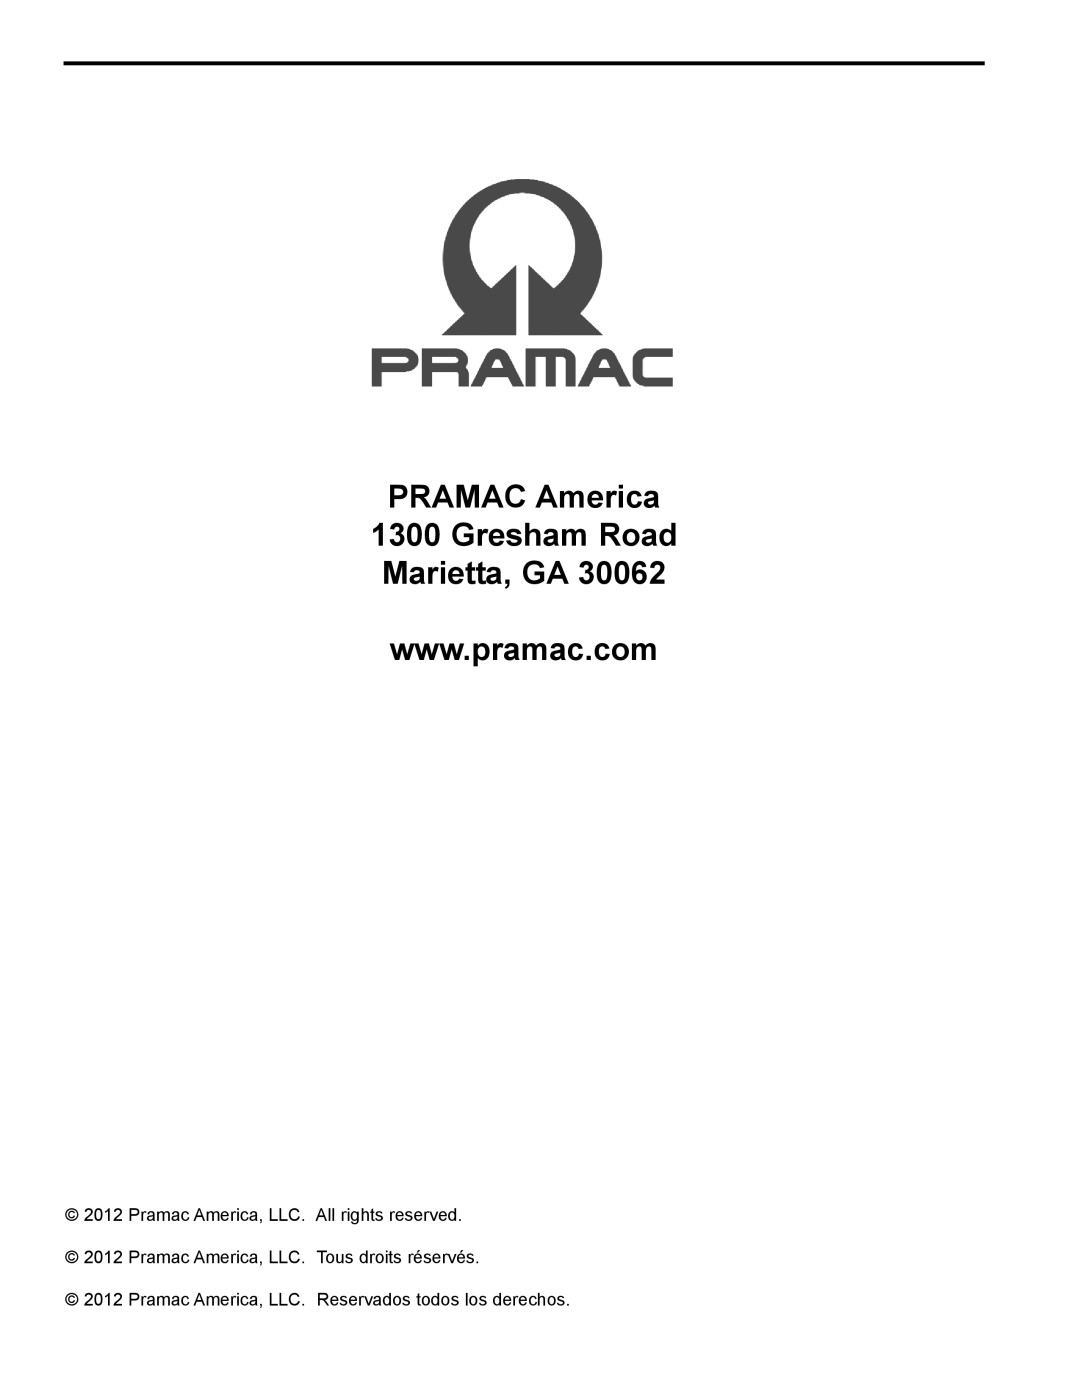 Sears S2800 user manual PRAMAC America 1300 Gresham Road Marietta, GA, Pramac America, LLC. Reservados todos los derechos 